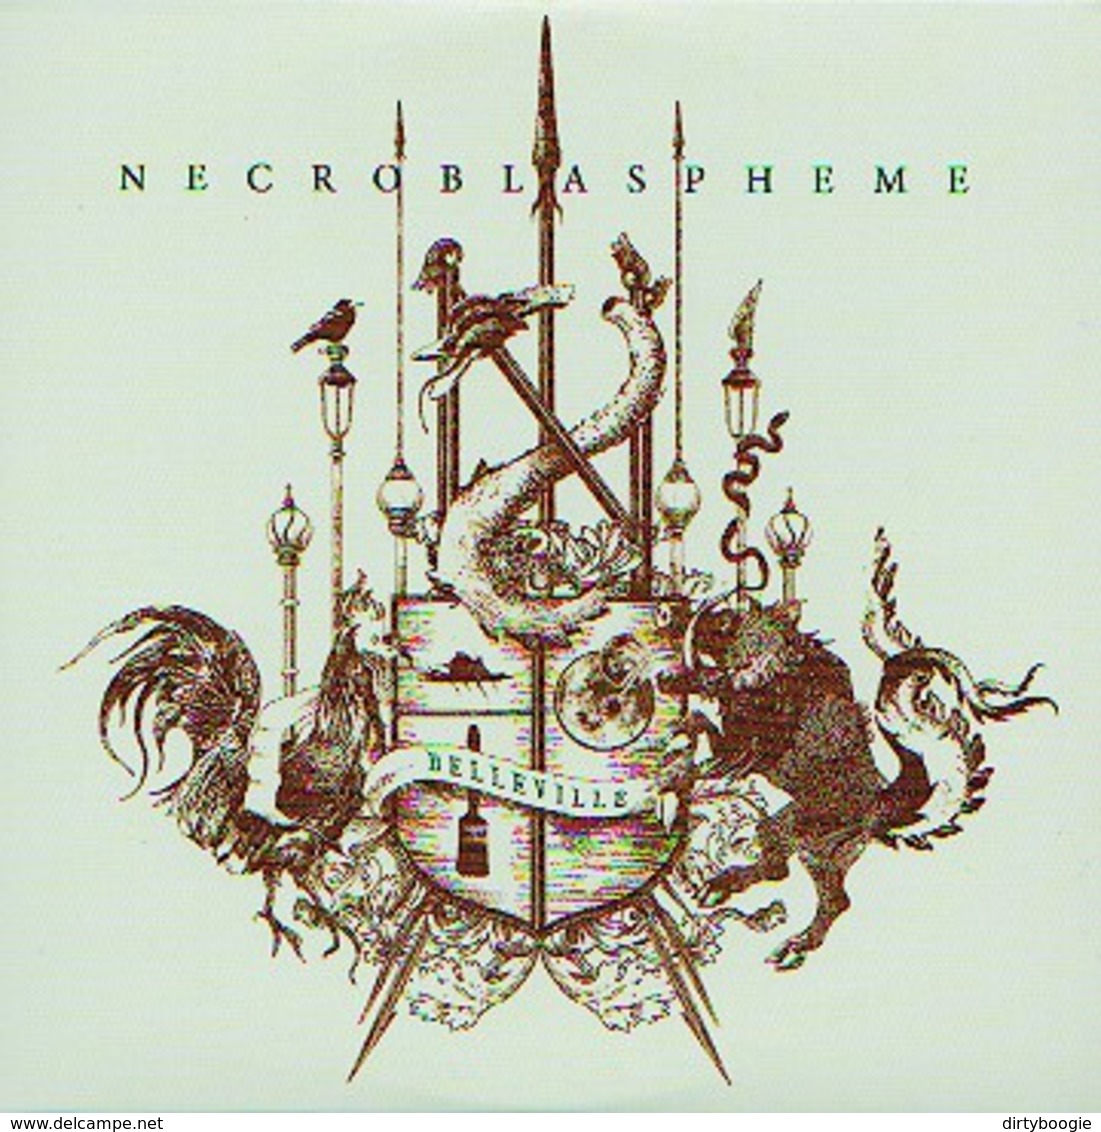 NECROBLASPHEME - Belleville - CD - DEATH BLACK METAL - Hard Rock En Metal